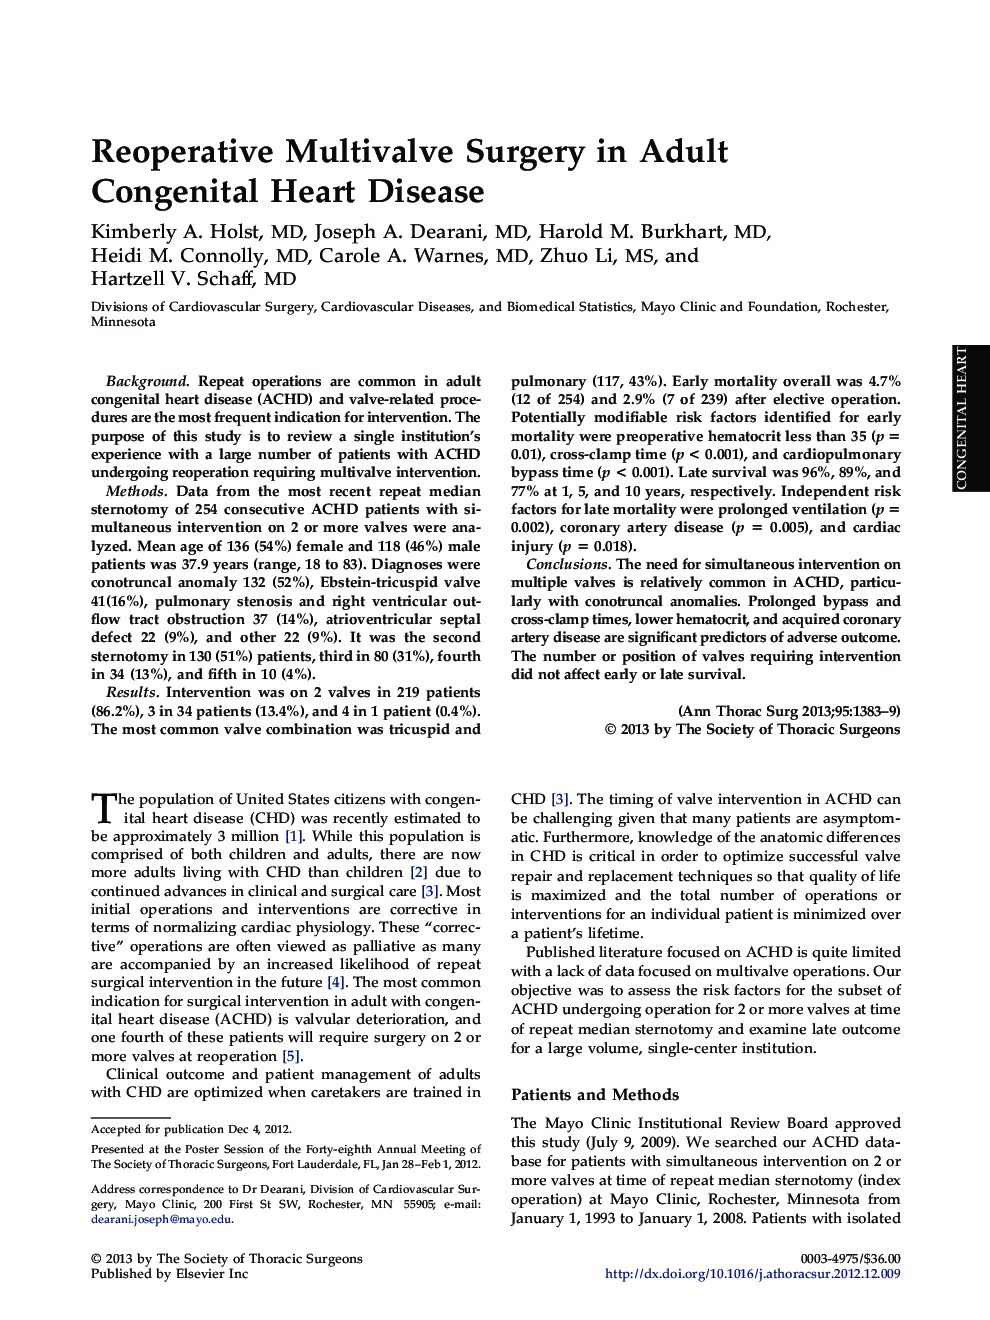 Reoperative Multivalve Surgery in Adult Congenital Heart Disease